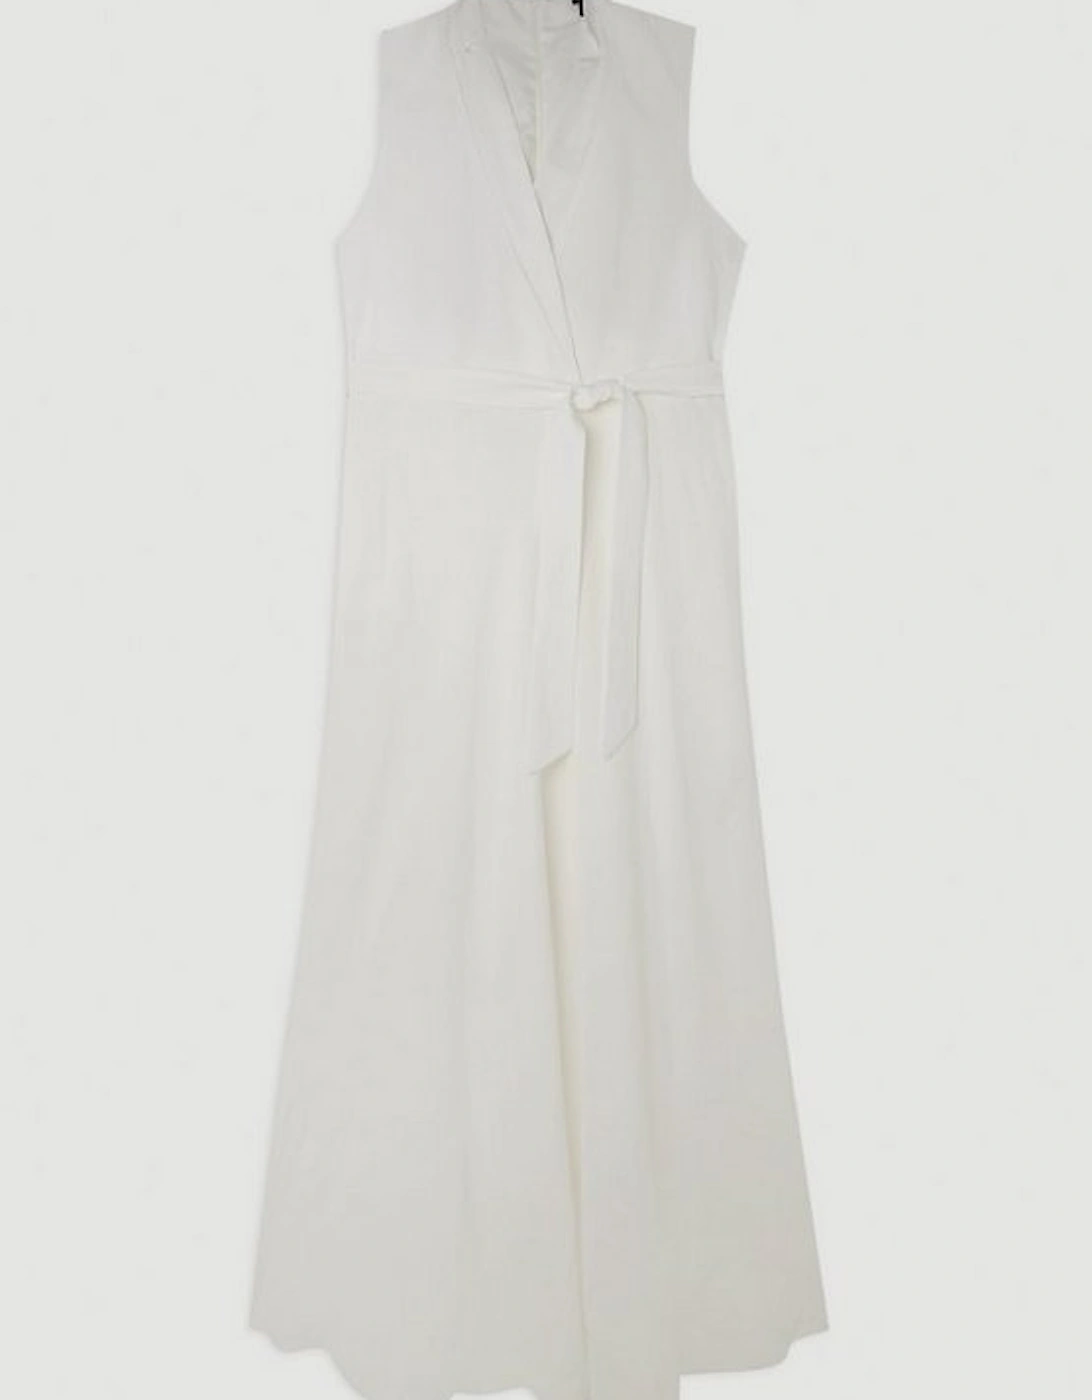 Plus Size Premium Tailored Linen Notch Neck Belted Dress